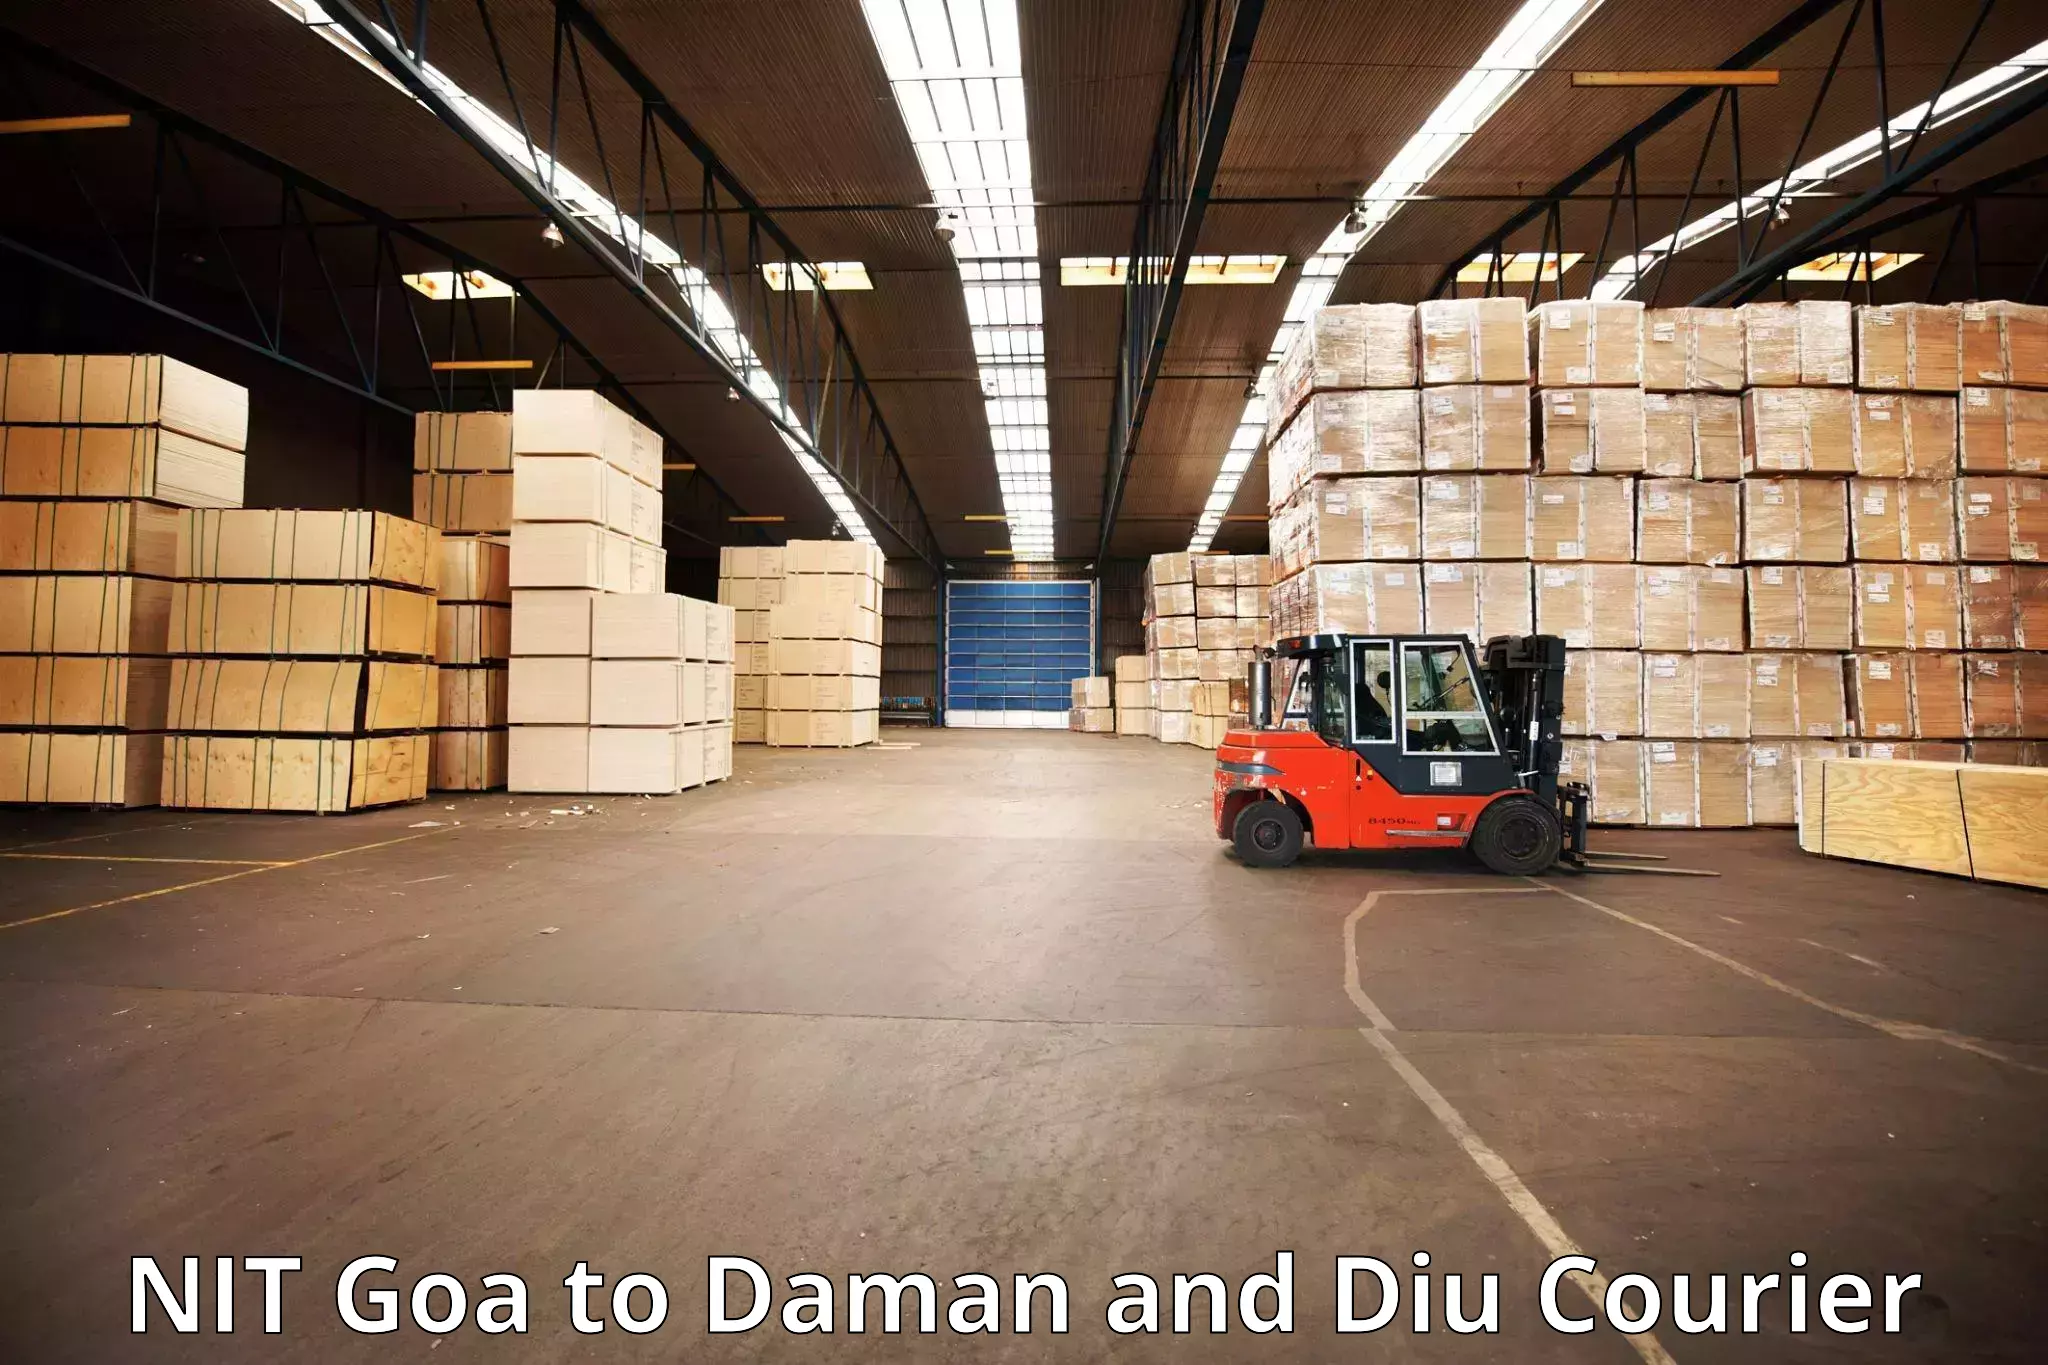 Luggage transport company NIT Goa to Daman and Diu